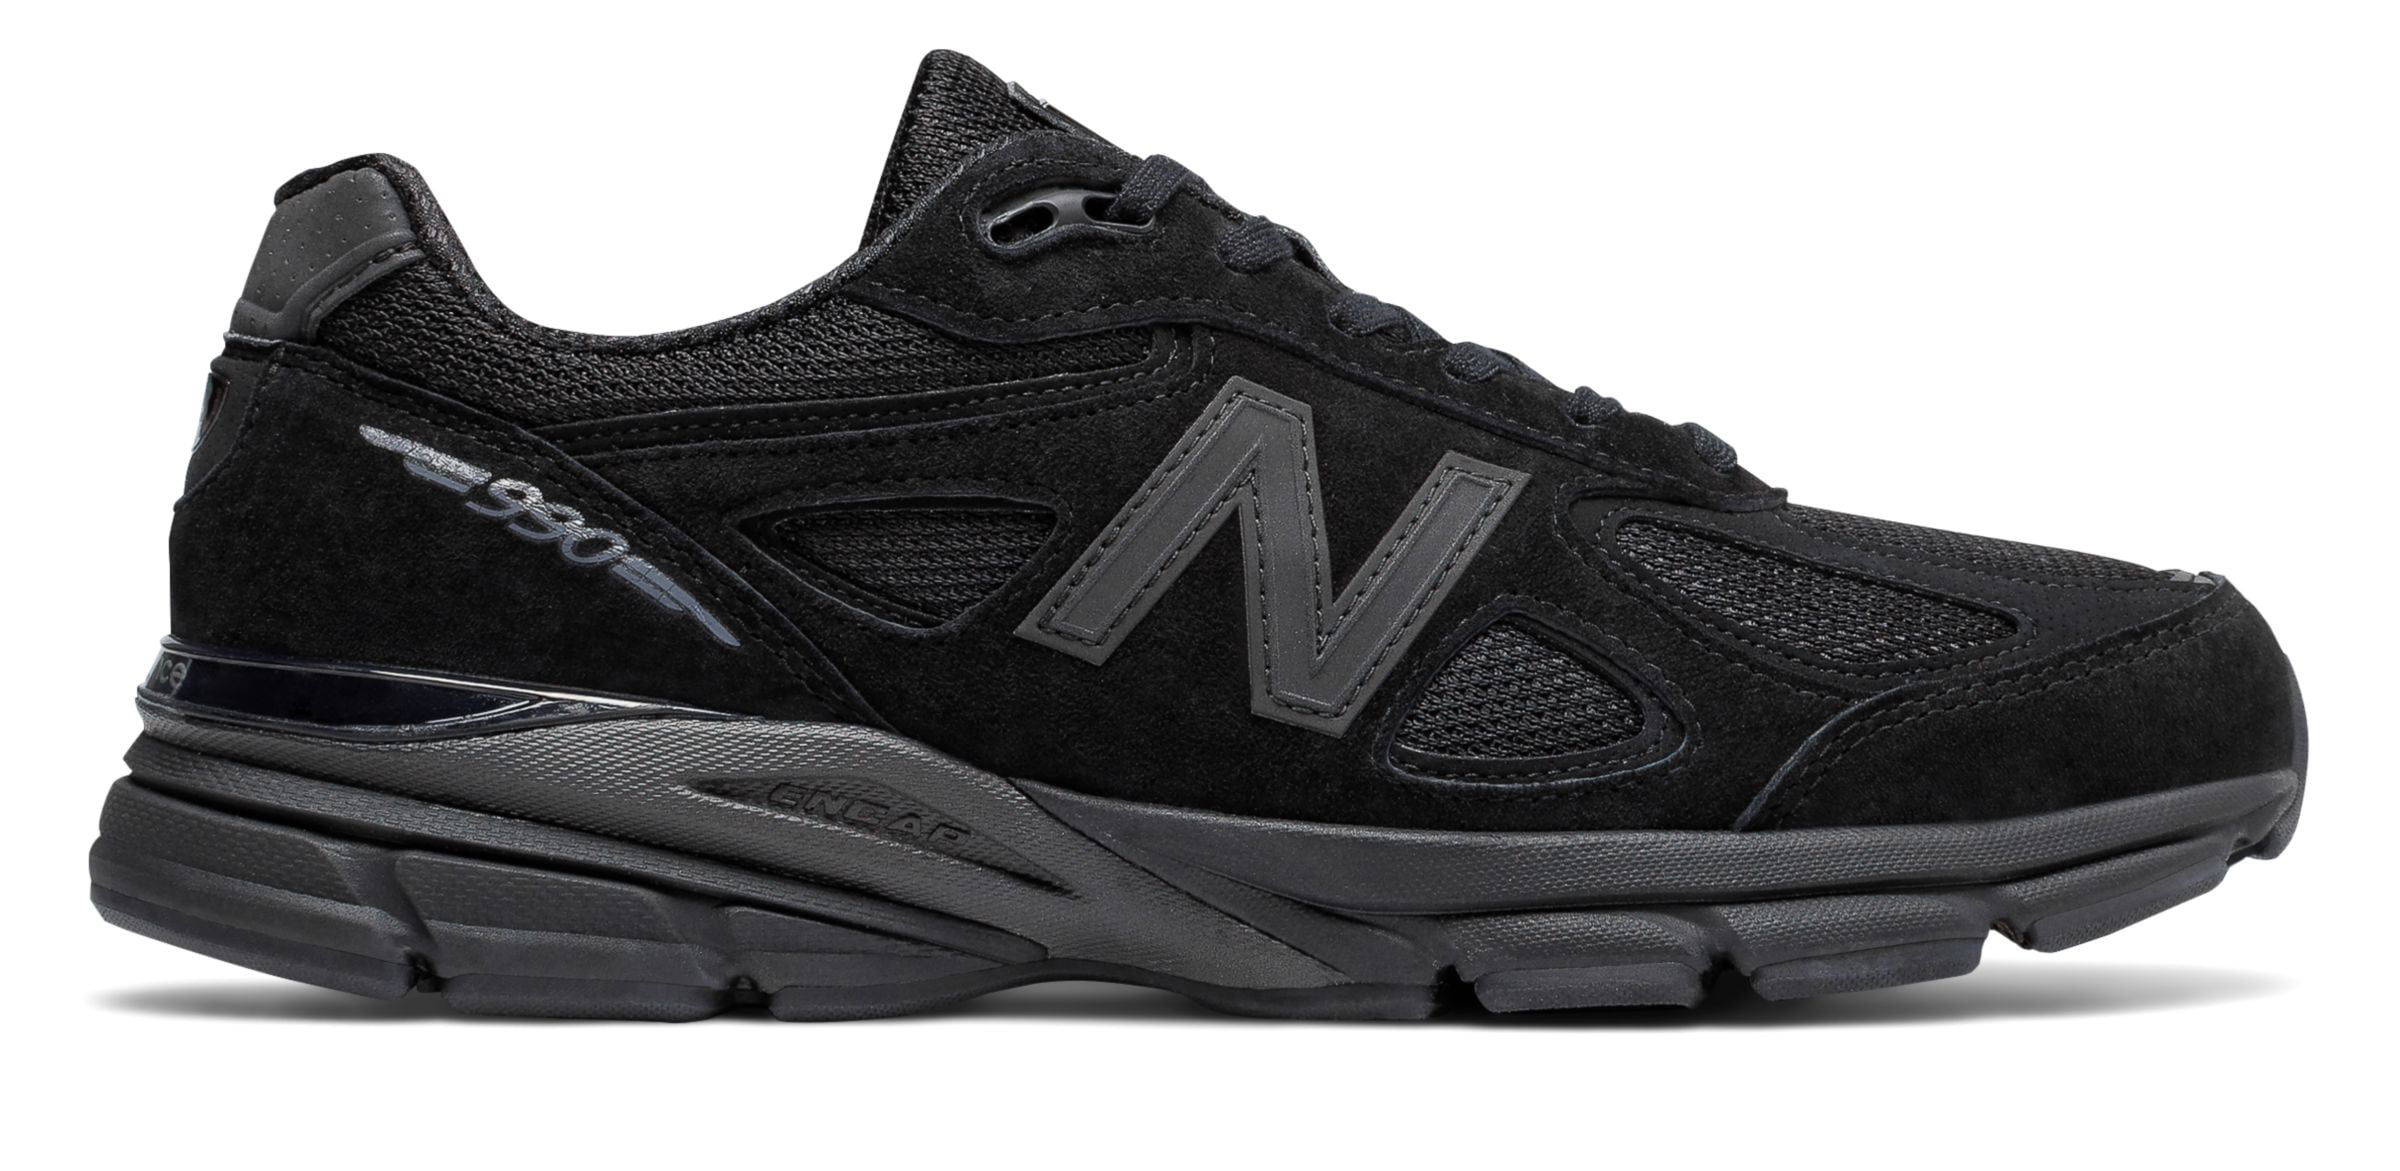 New Balance Men's 990v4 Made in US Shoes Black